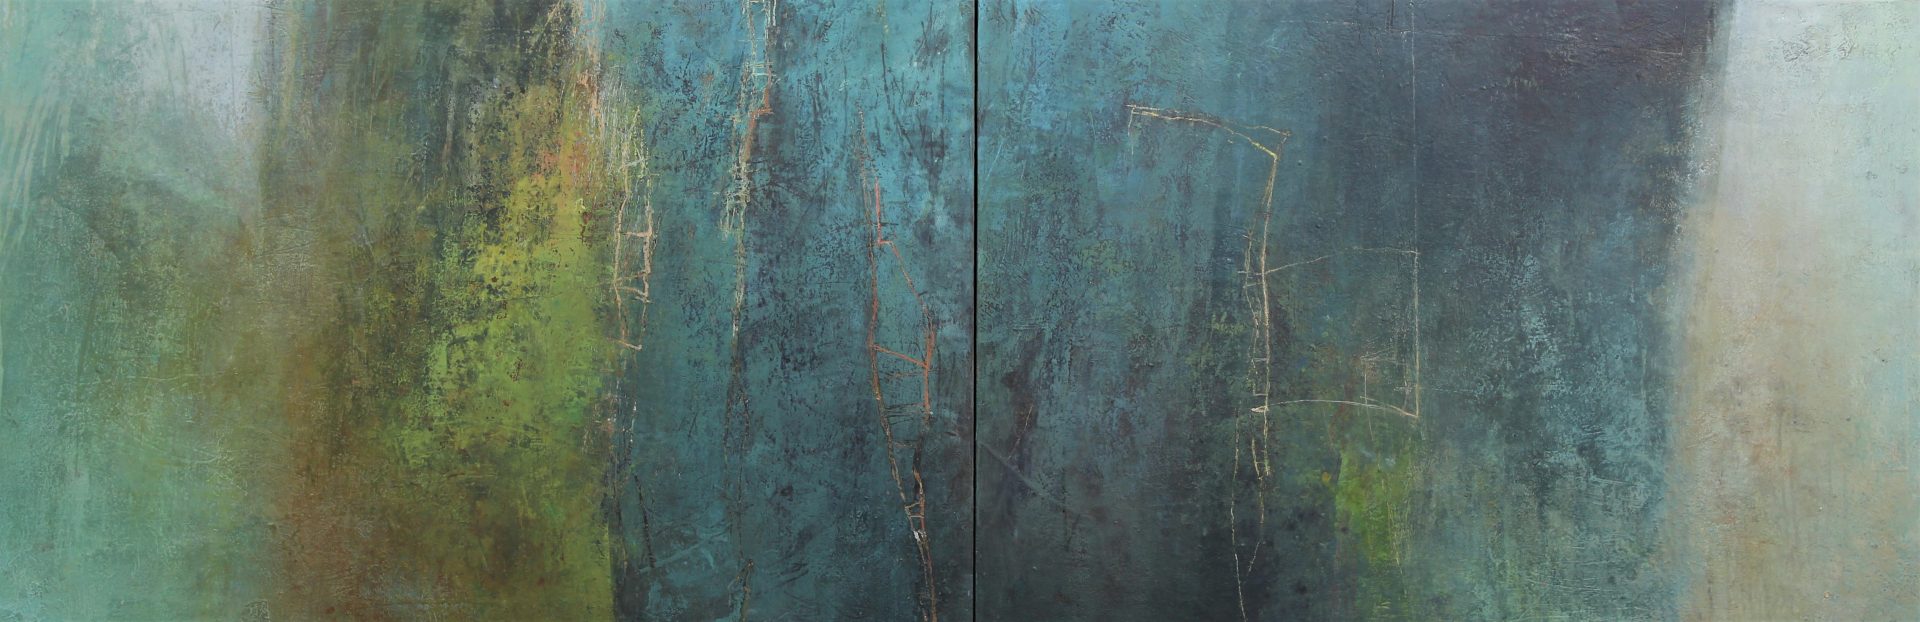 Slow Time | Kym Barrett | Oils and cold wax medium on board | 182 x 62 cm diptych. framed in oak | $3800